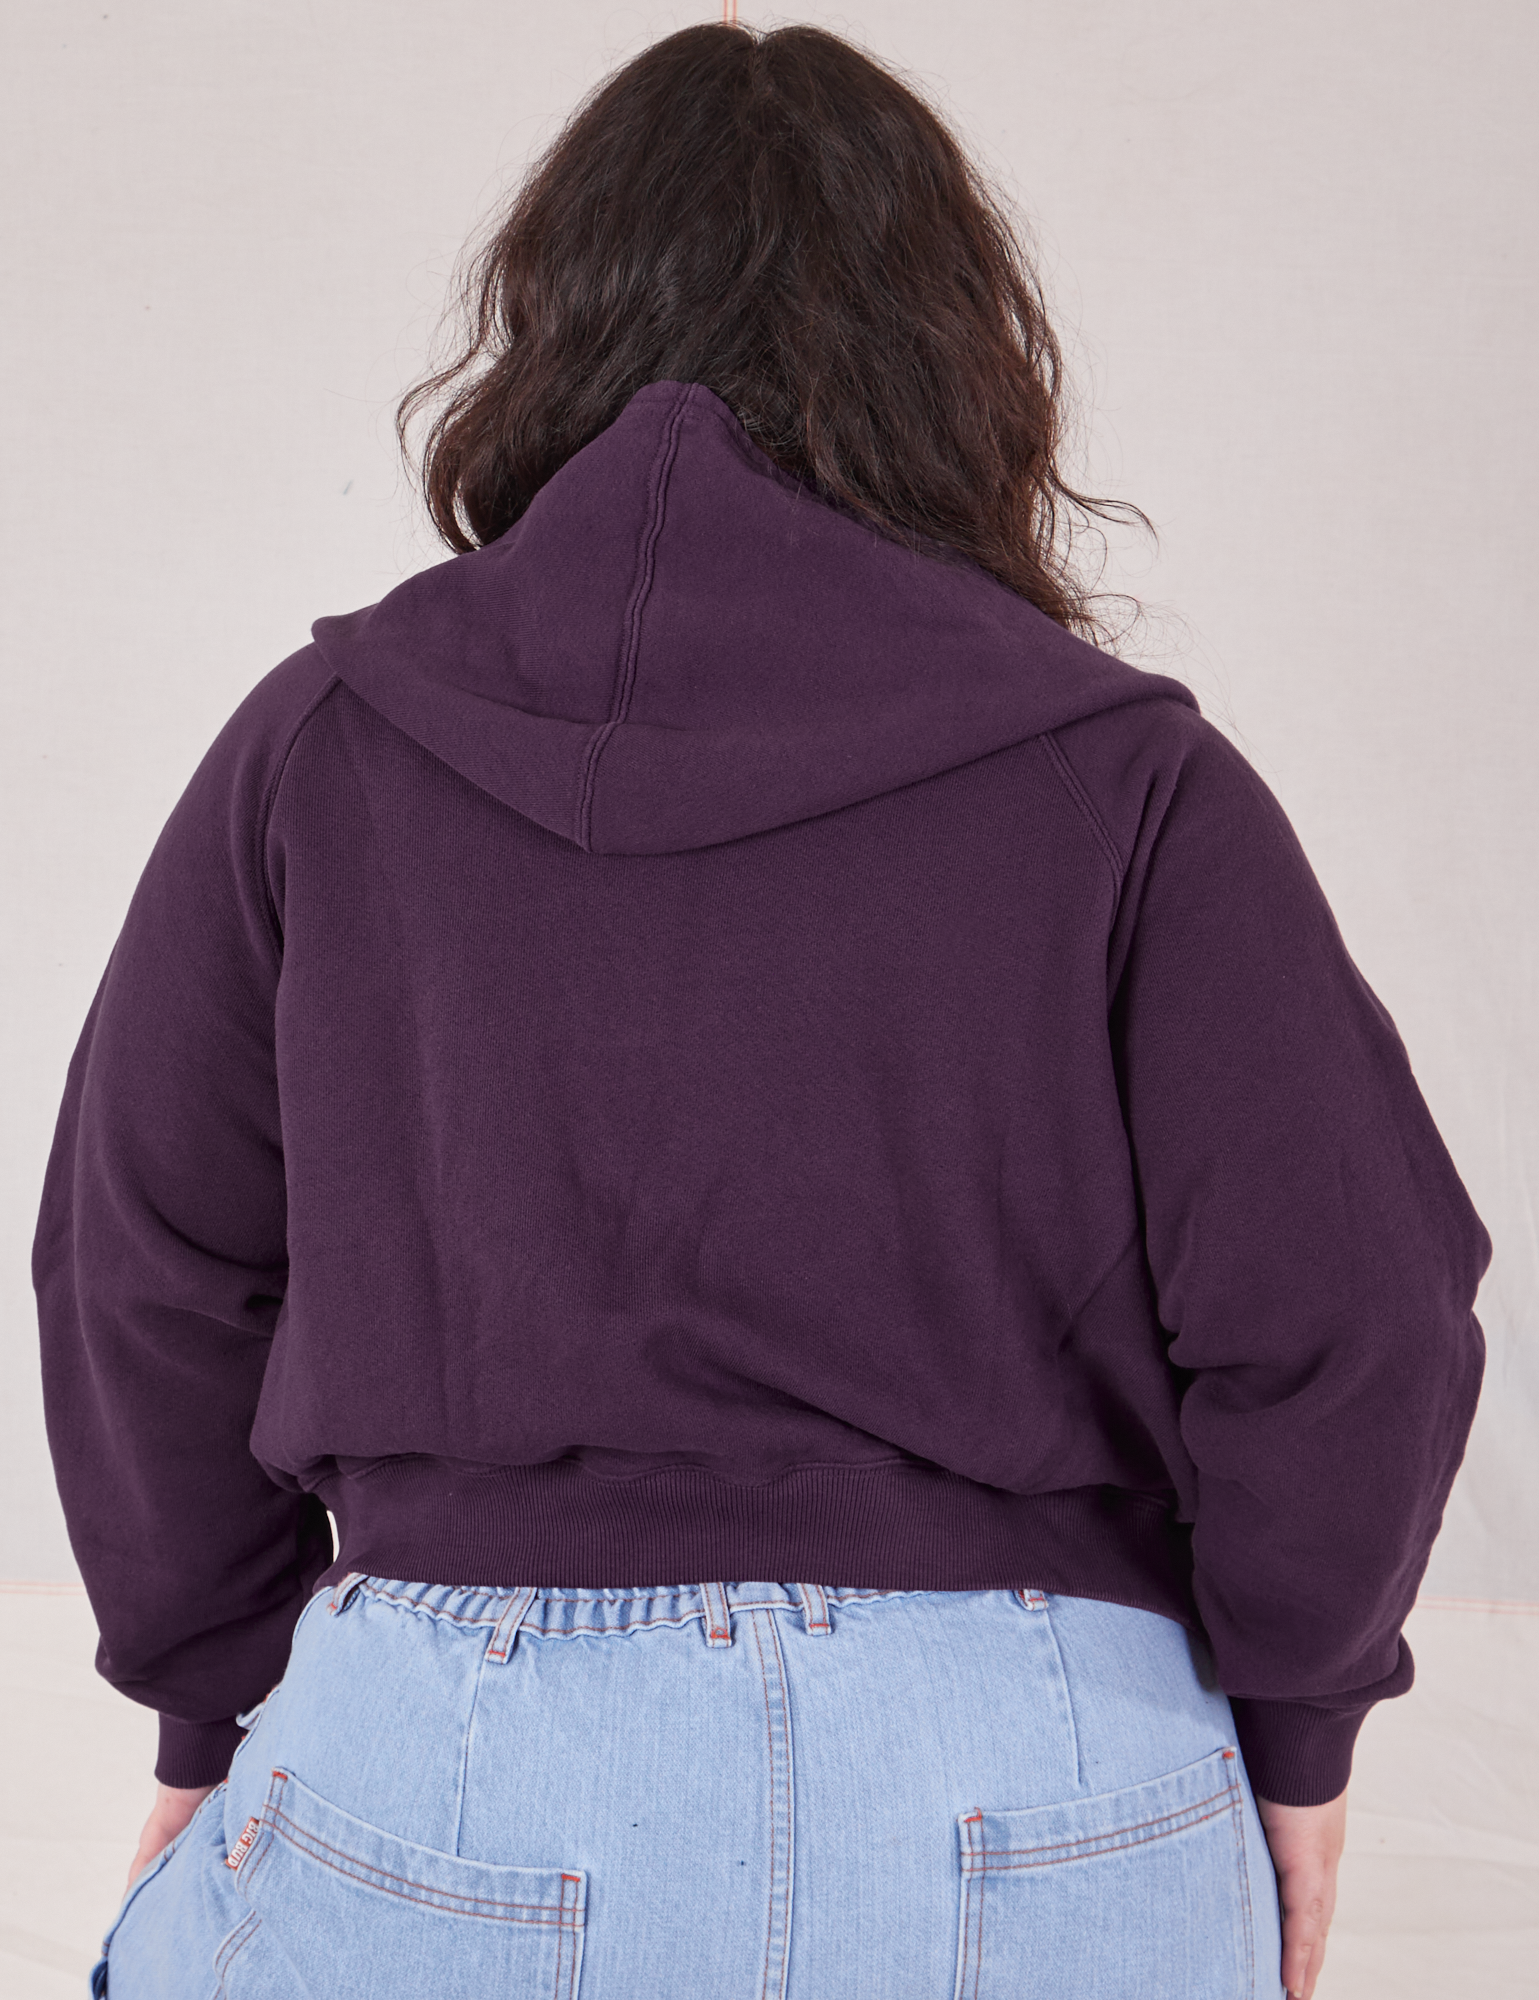 Cropped Zip Hoodie in Nebula Purple back view on Ashley